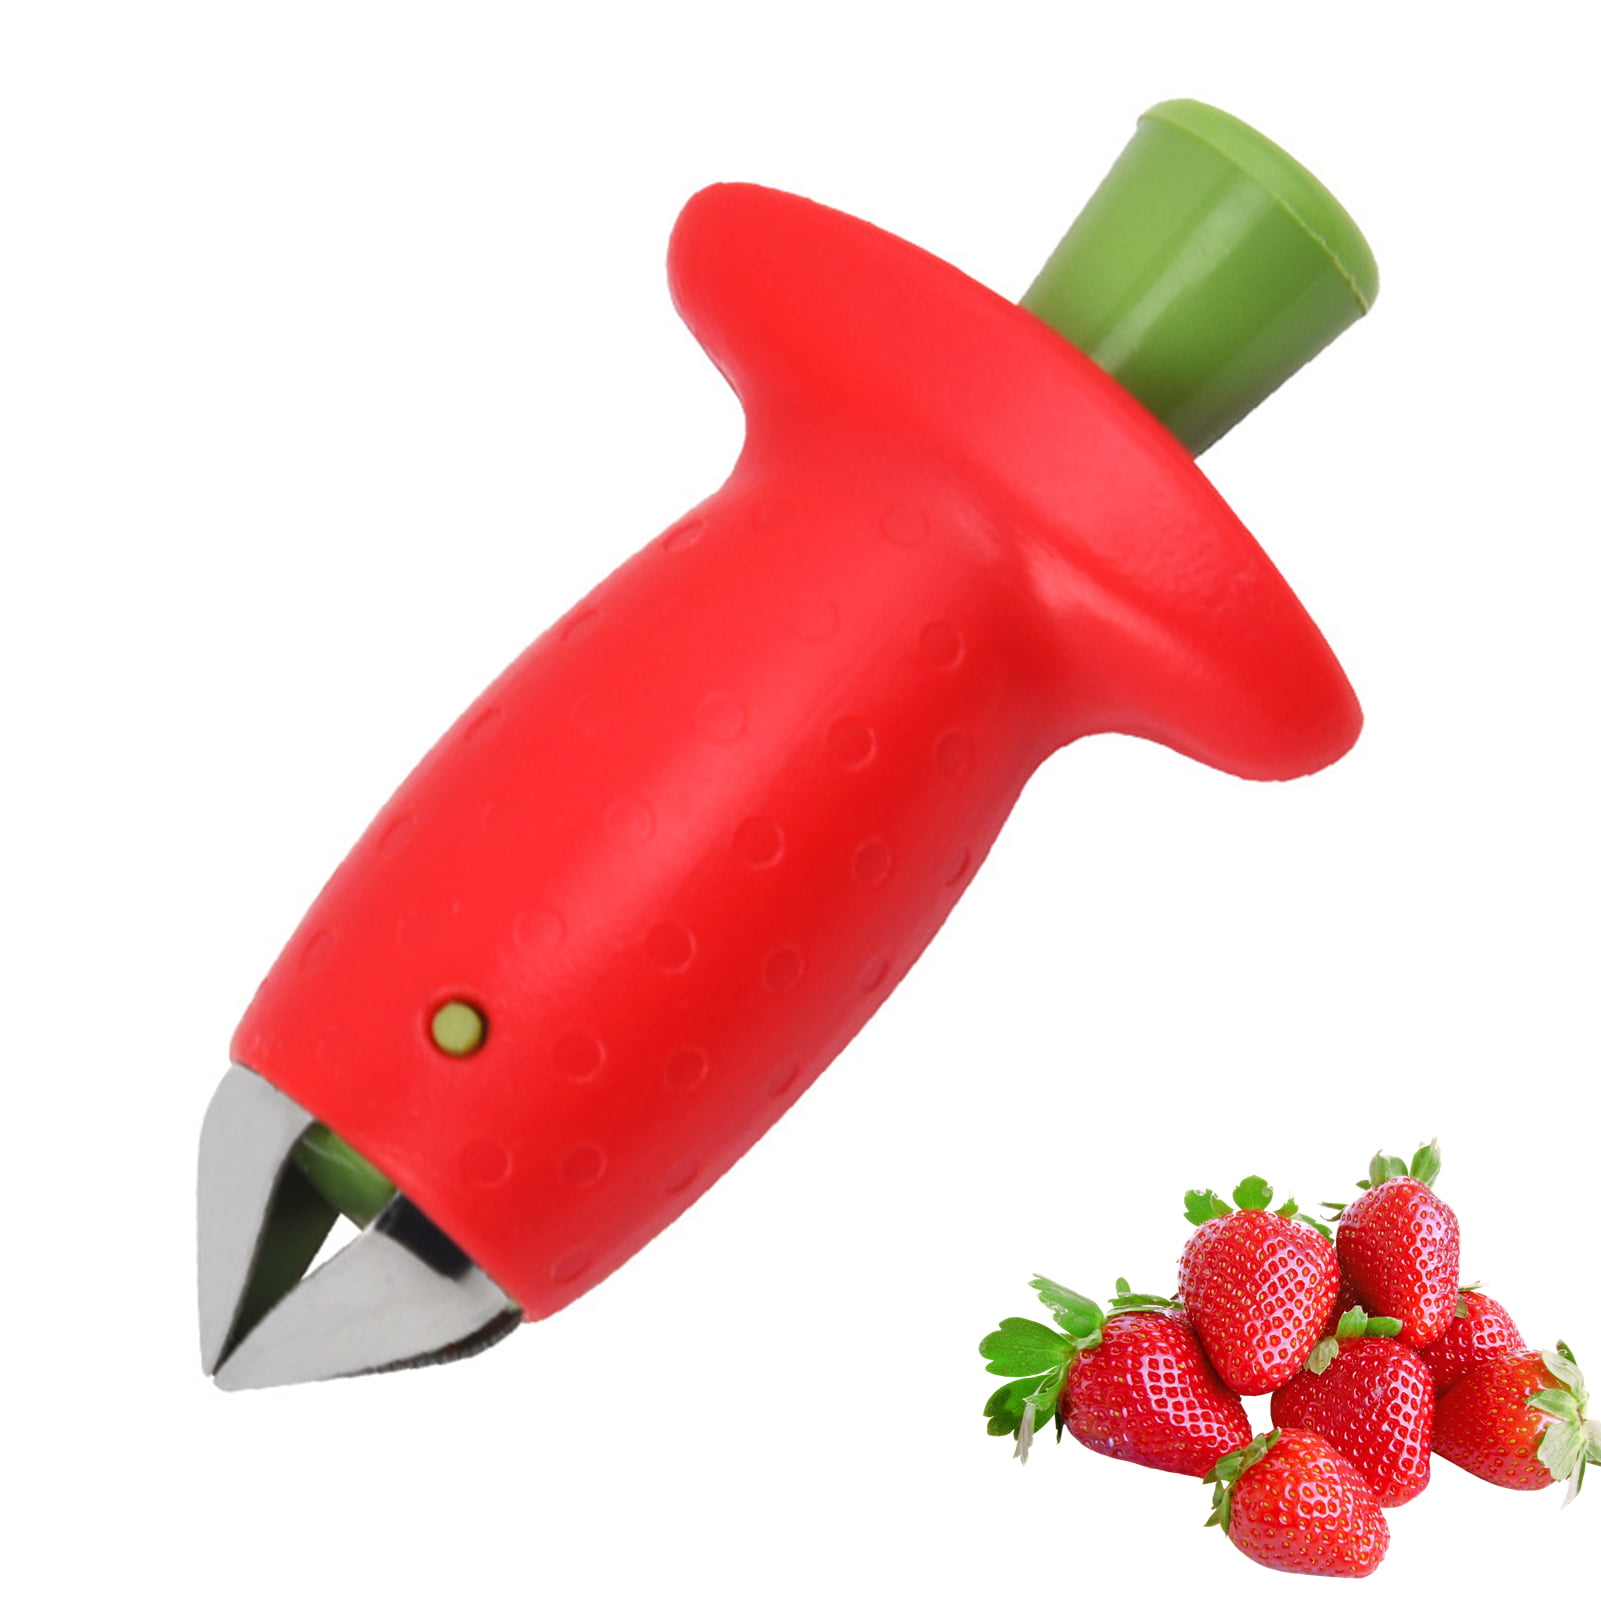 ghfcffdghrdshdfh Novelty Strawberry Tomatoes Stem Huller Remover Fruit Corer Kitchen DIY Tool 